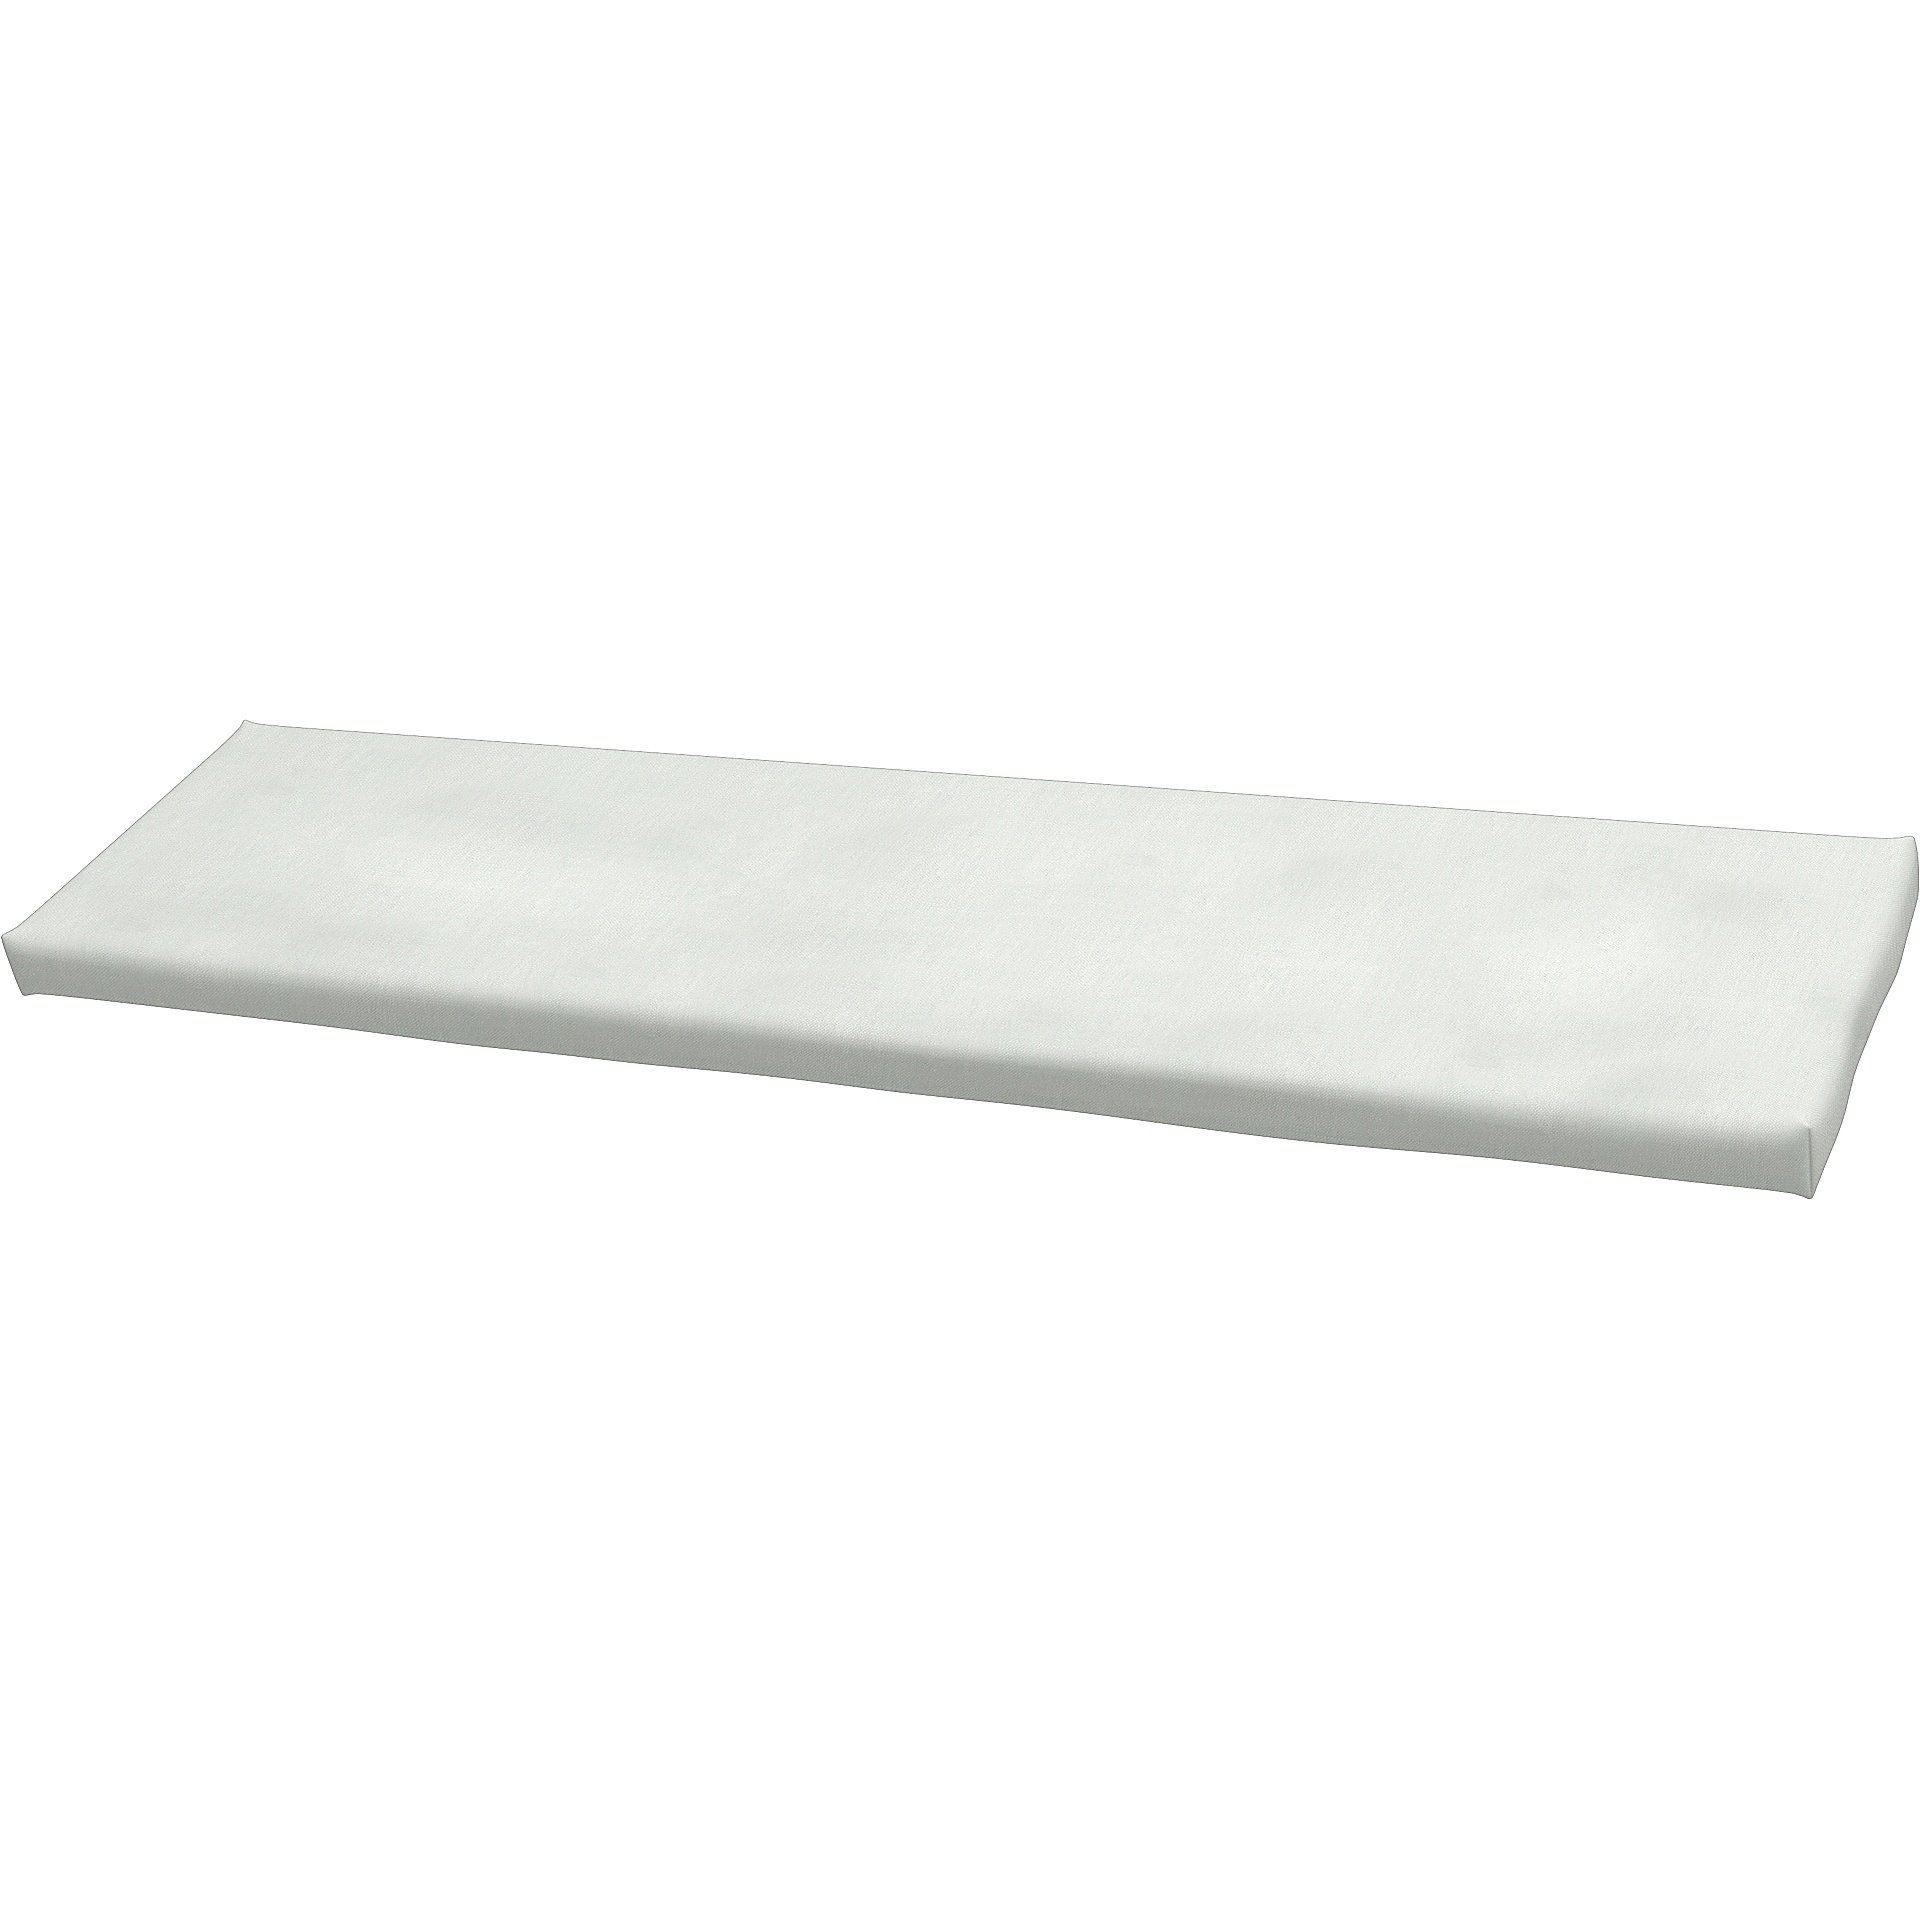 IKEA - Universal bench cushion cover 120x35x3,5 cm, Silver Grey, Linen - Bemz